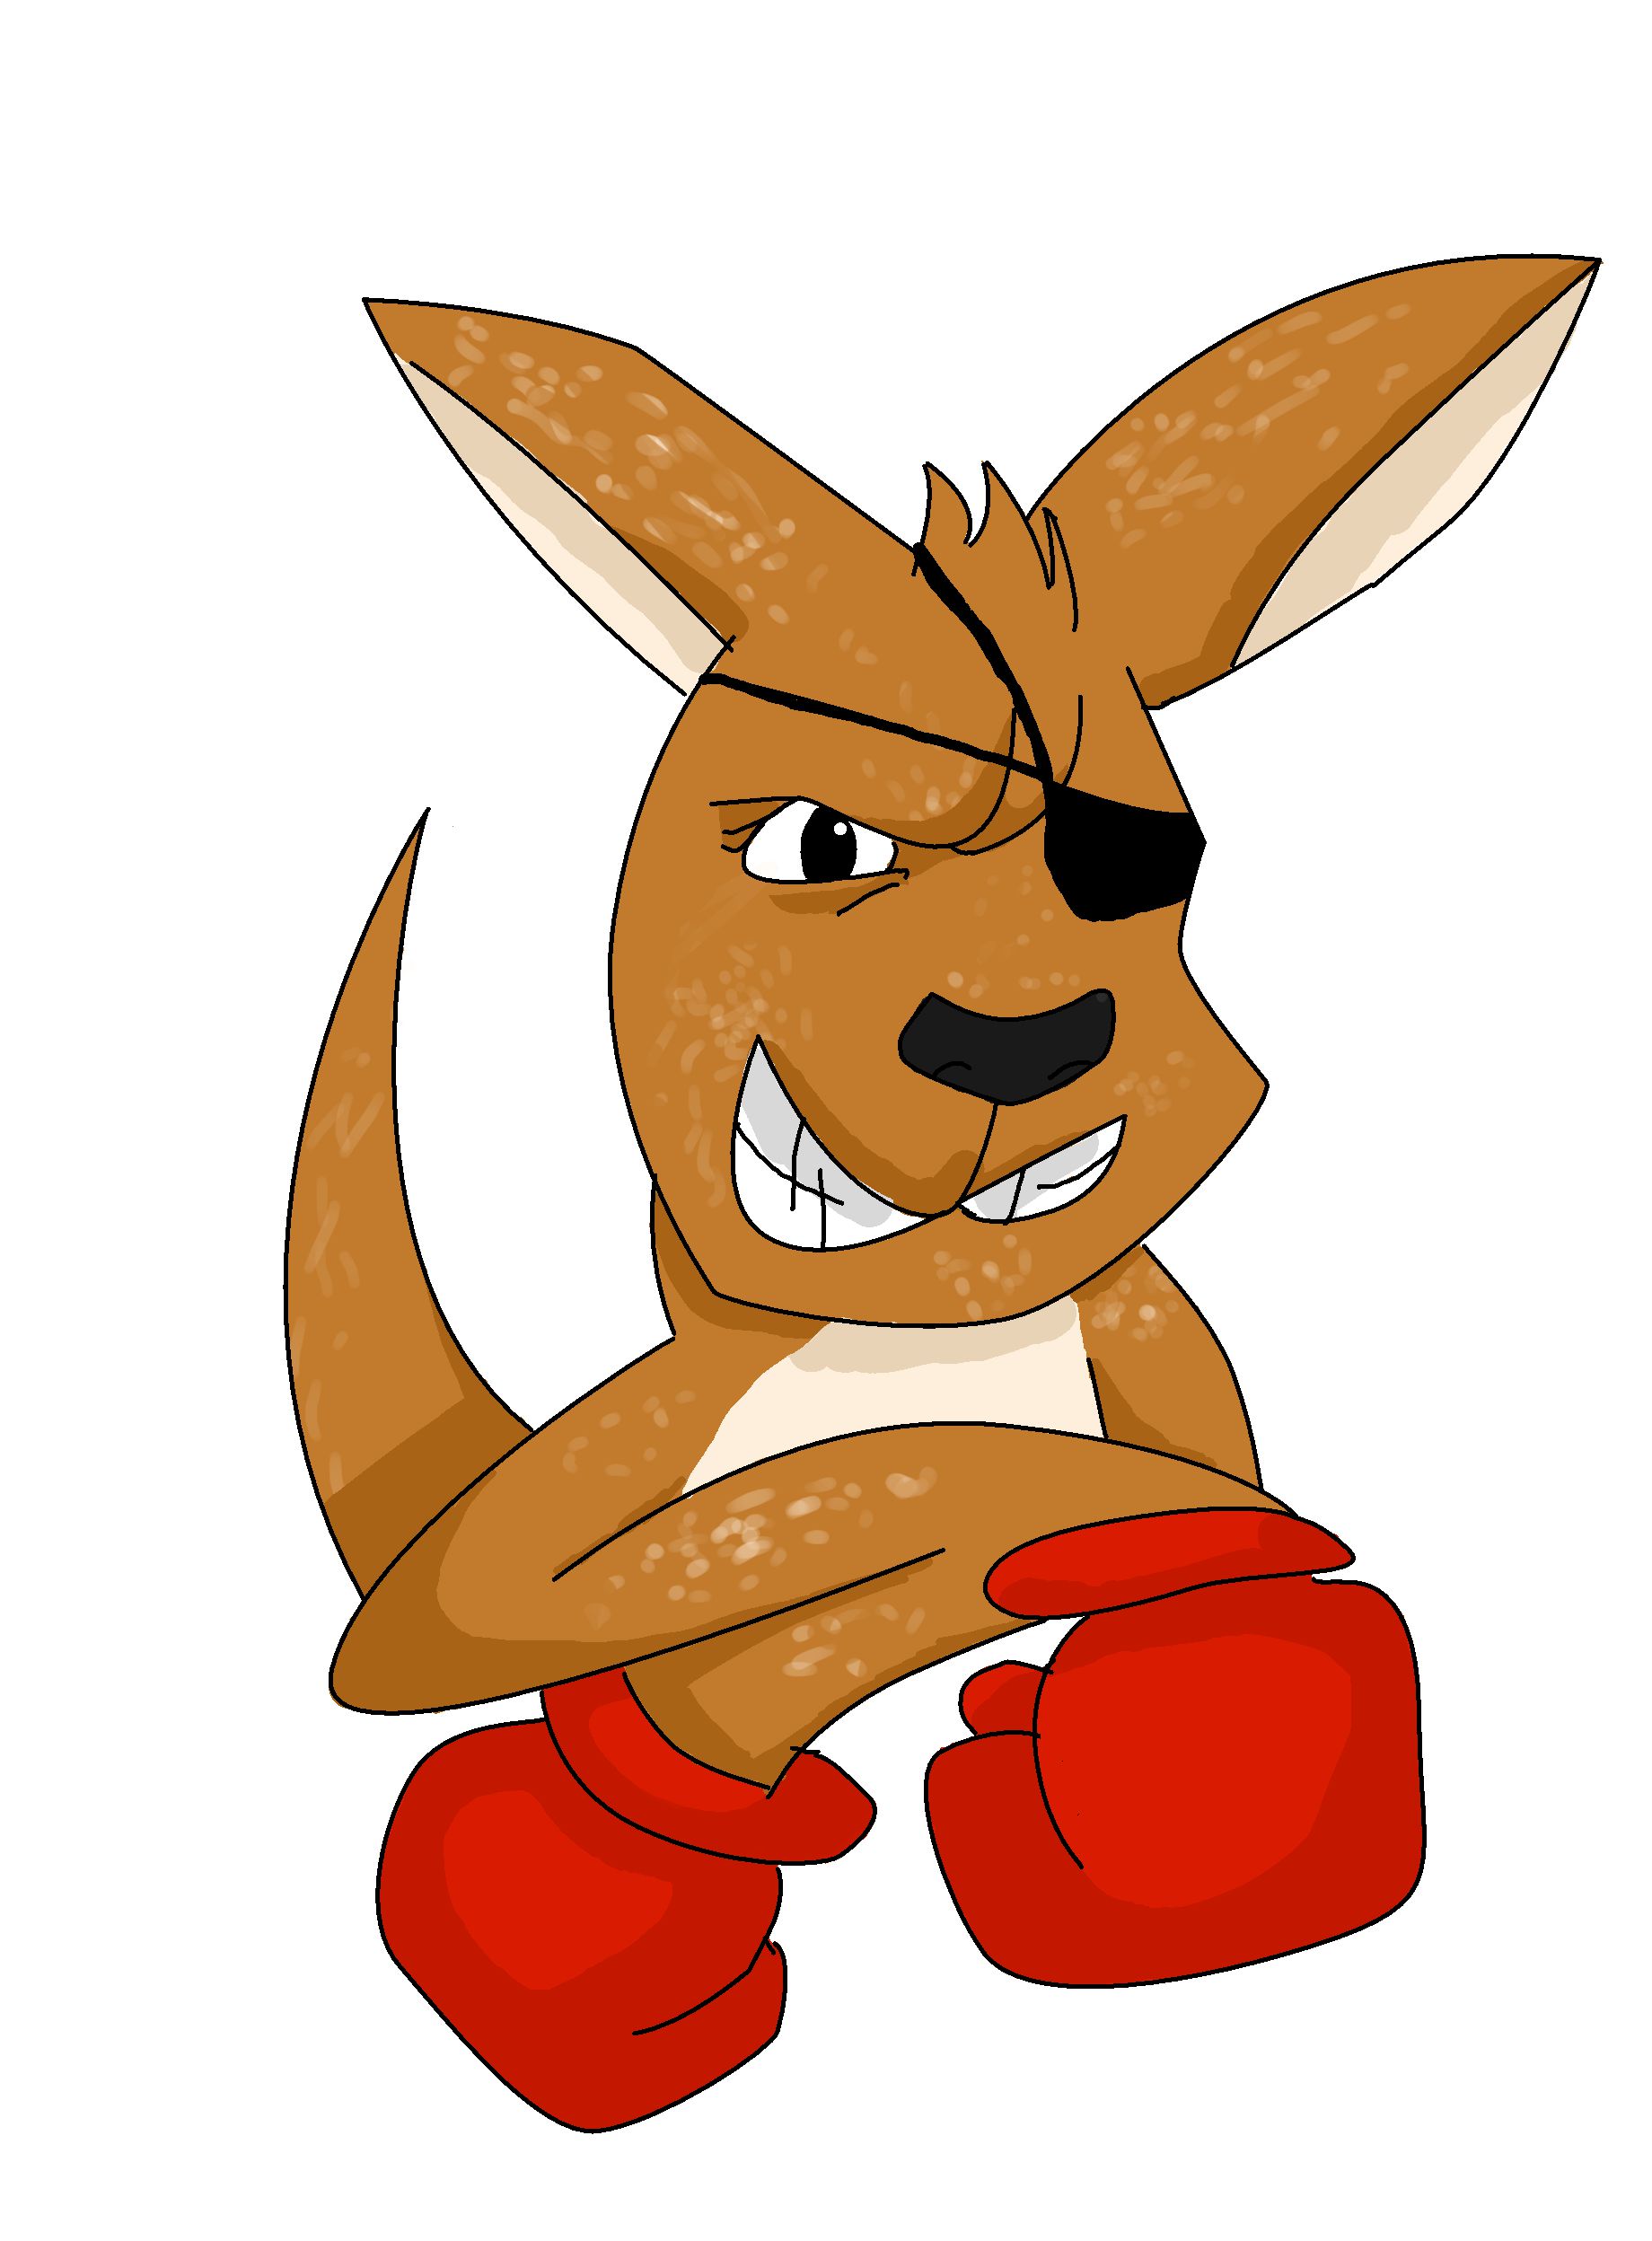 rough-looking cartoon kangaroo, credit to Jessica Seip